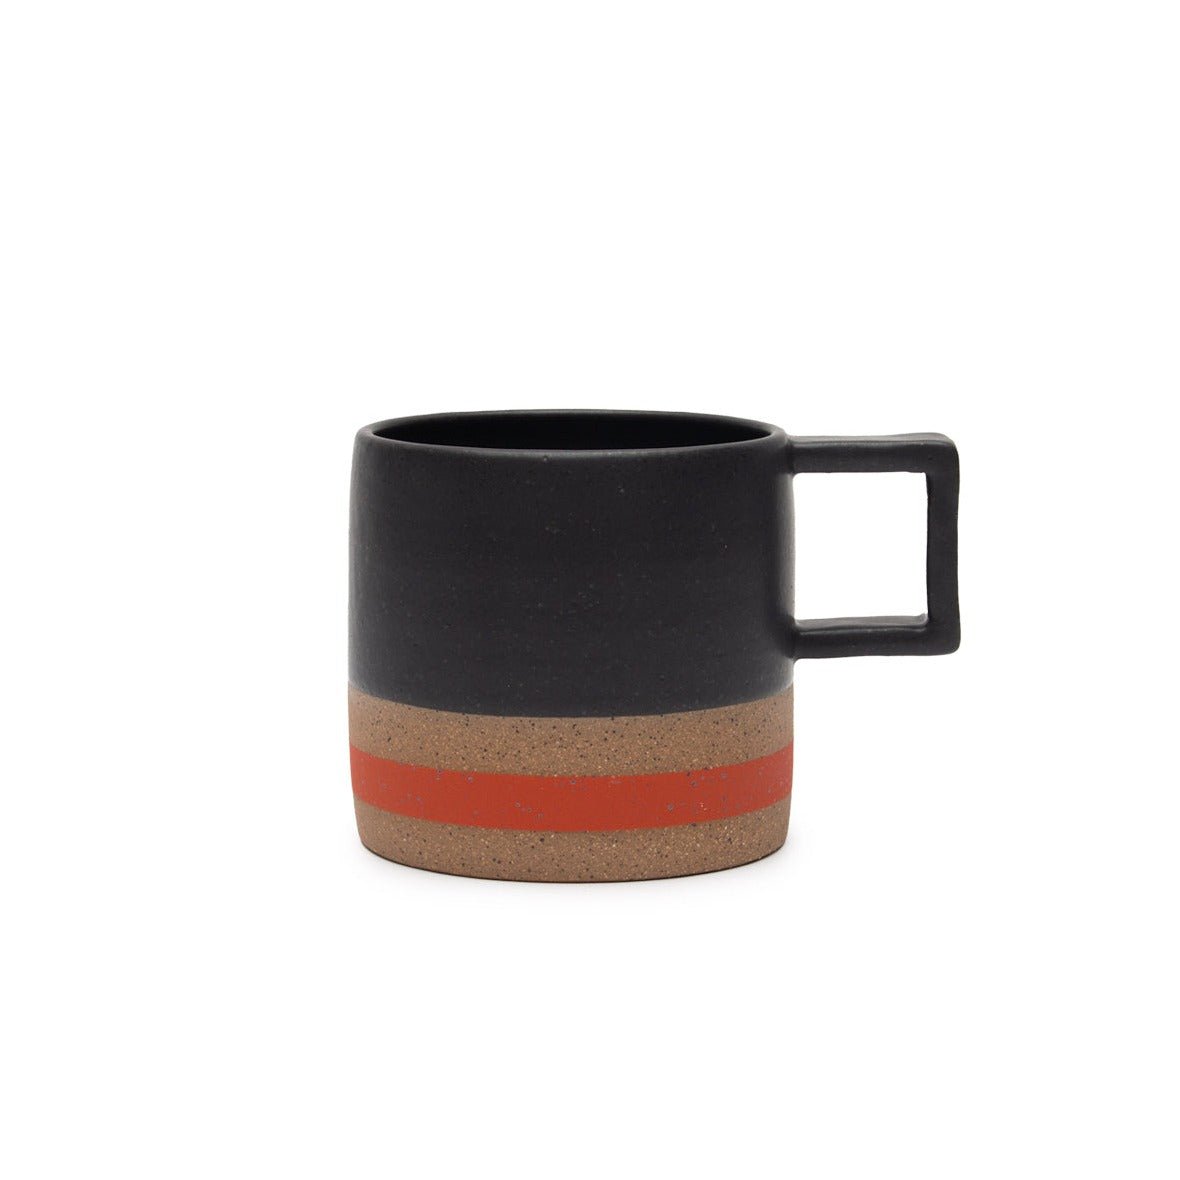 Handle Mug with black satin glaze and a reddish/orange stripe. Made in Hood River, Oregon by Wolf Ceramics.